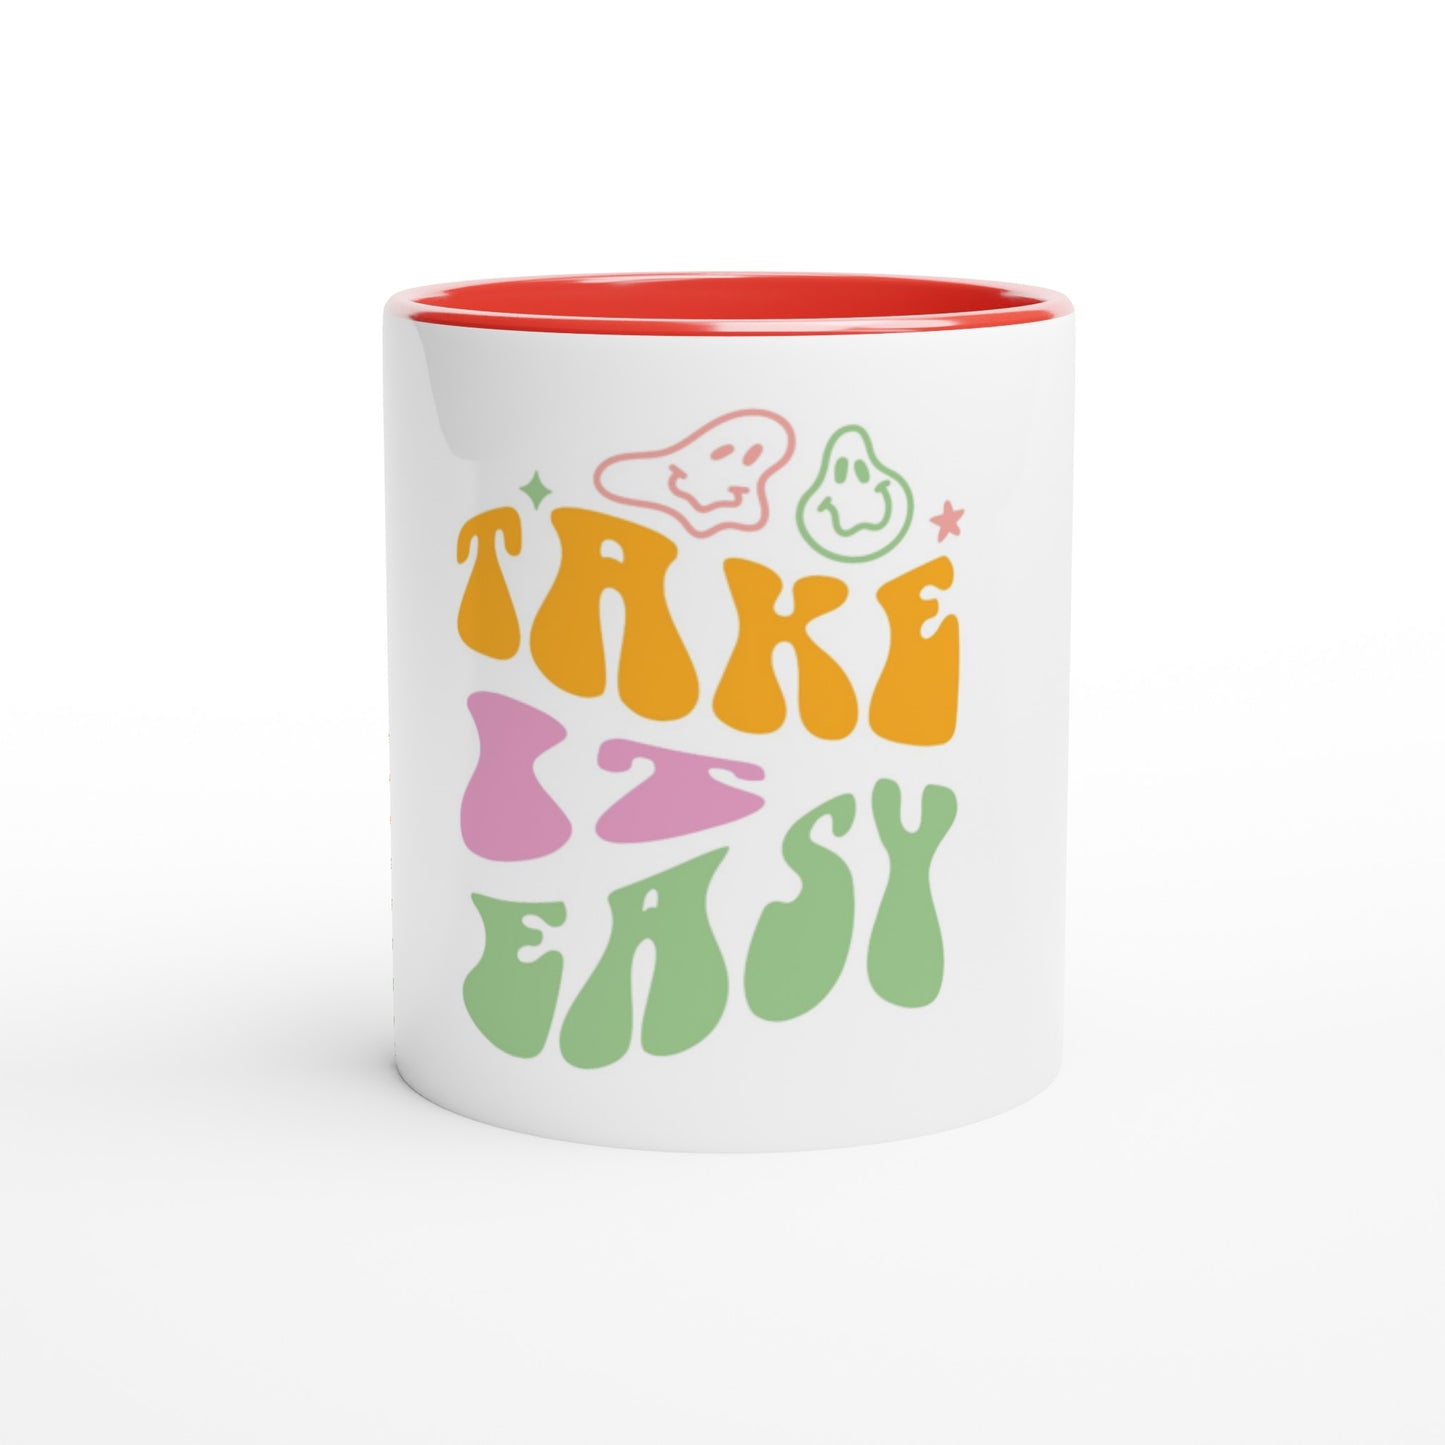 Take It Easy - White 11oz Ceramic Mug with Color Inside